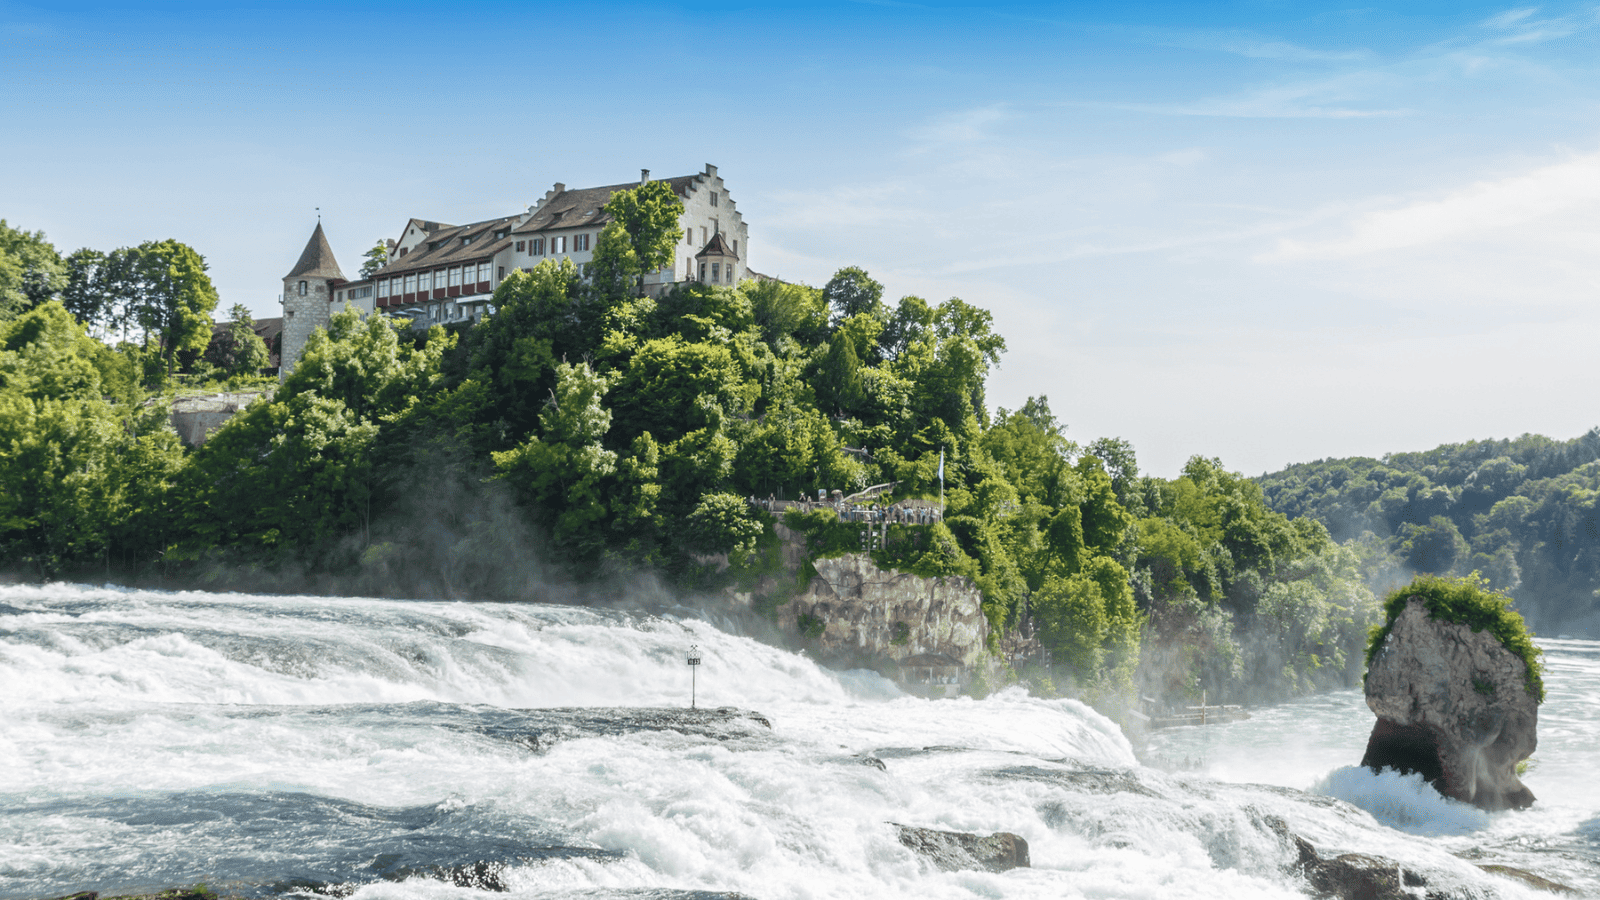 The Rhine Waterfall